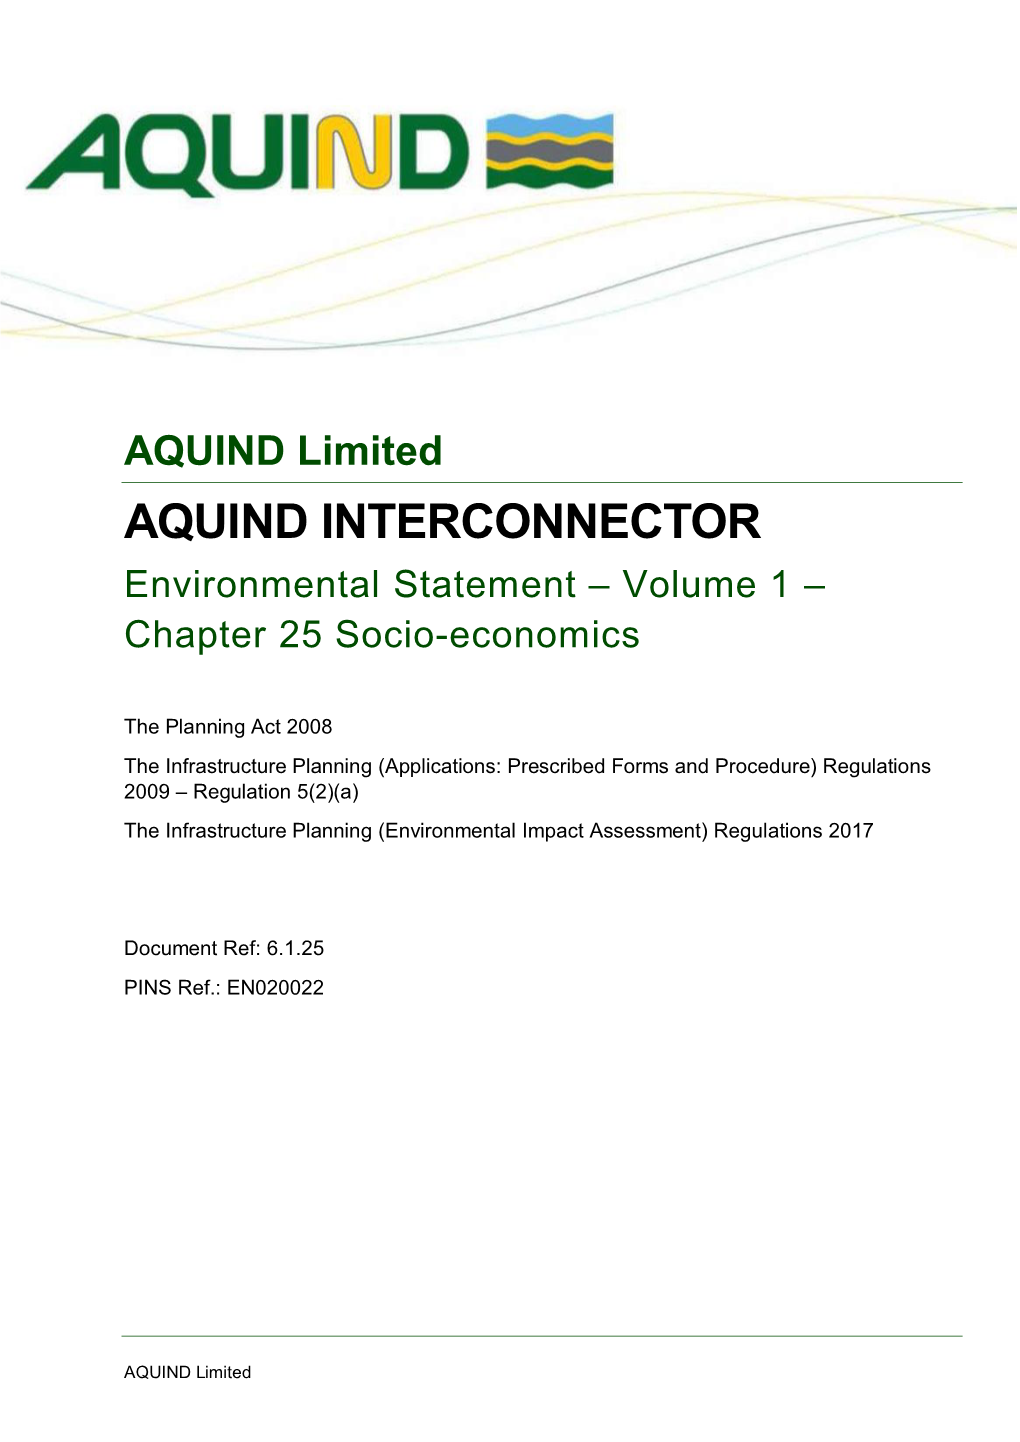 AQUIND Limited AQUIND INTERCONNECTOR Environmental Statement – Volume 1 – Chapter 25 Socio-Economics